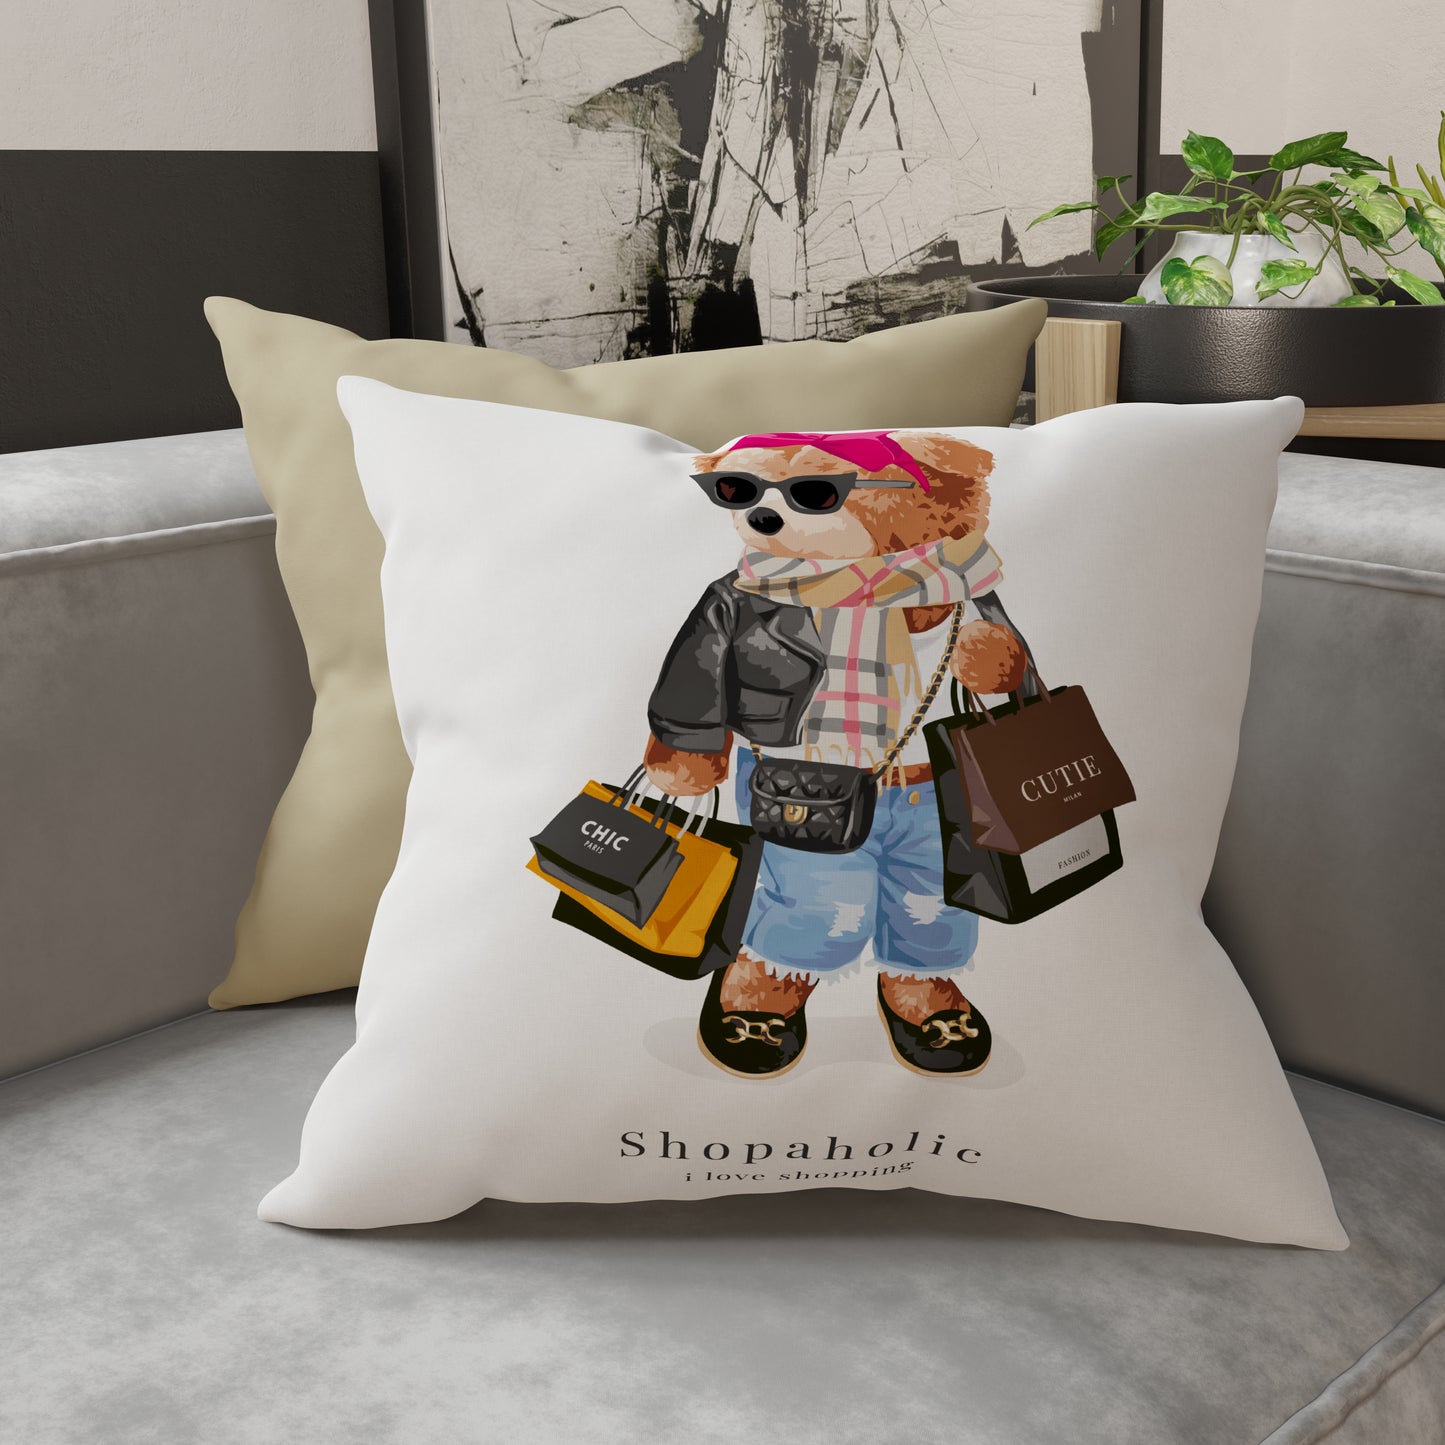 Cushions, Sofa Cushion Covers, Furnishing Cushions in Teddy Love Shopping Digital Print